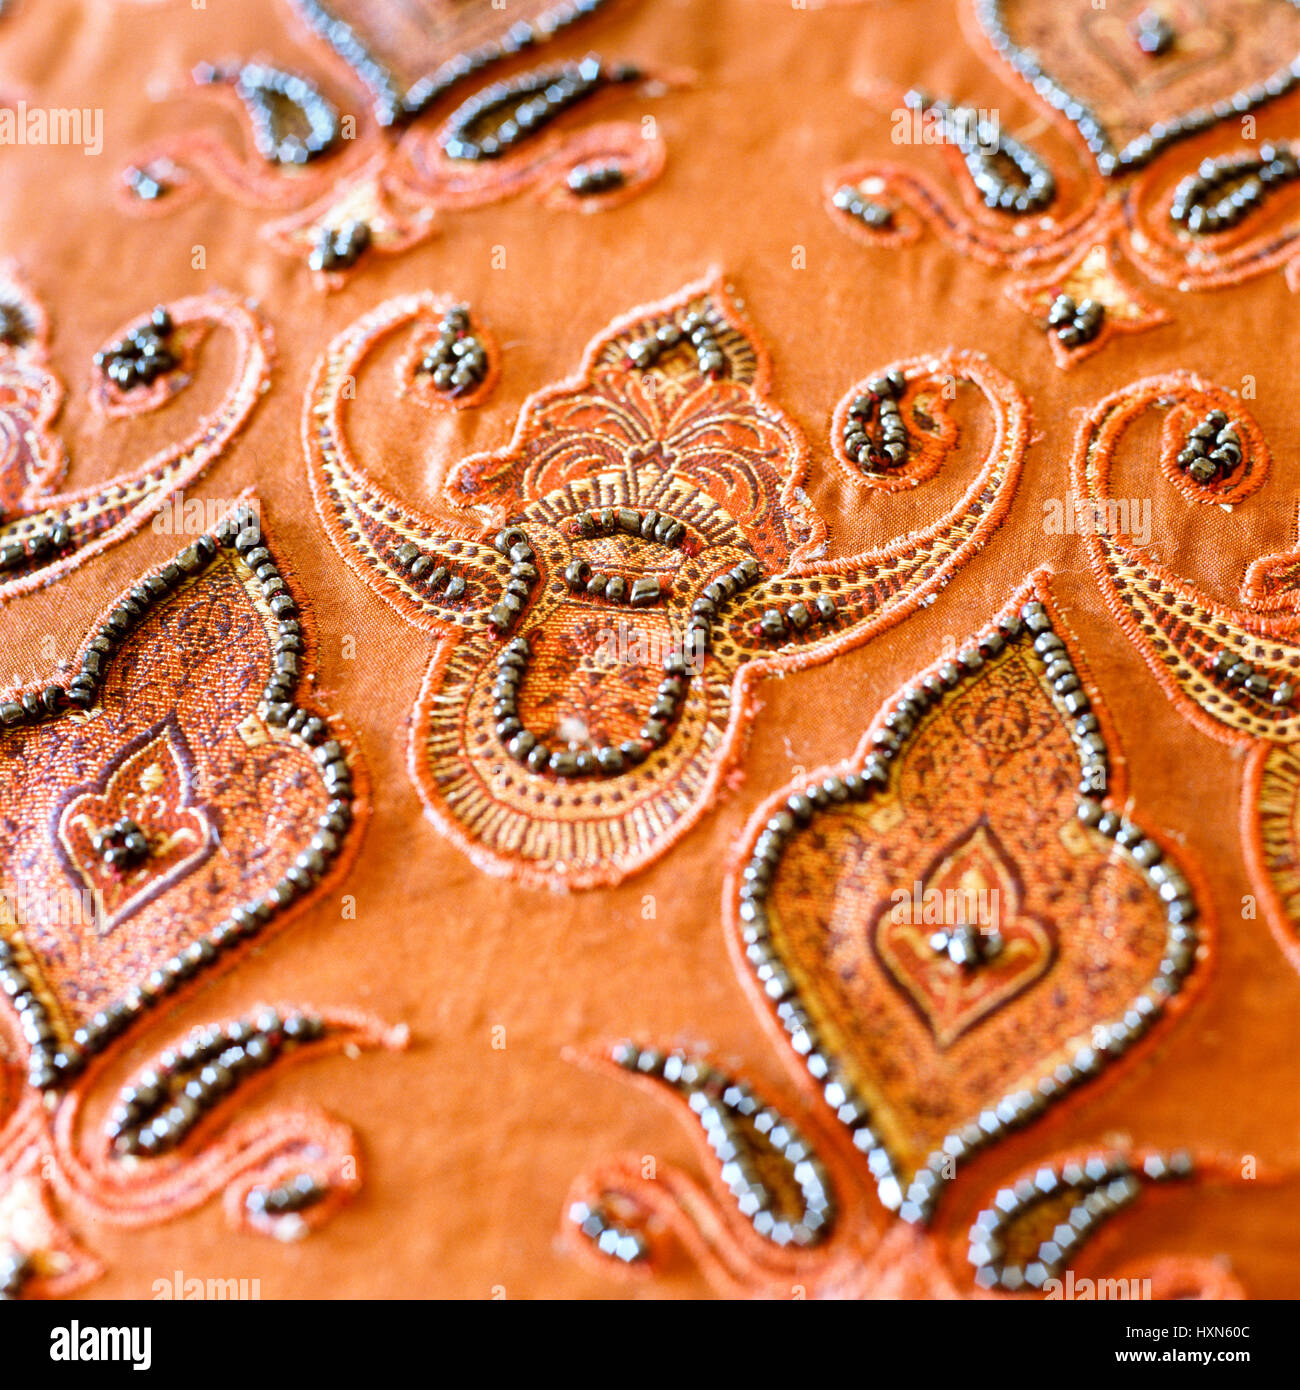 Bead detailing on orange fabric. Stock Photo